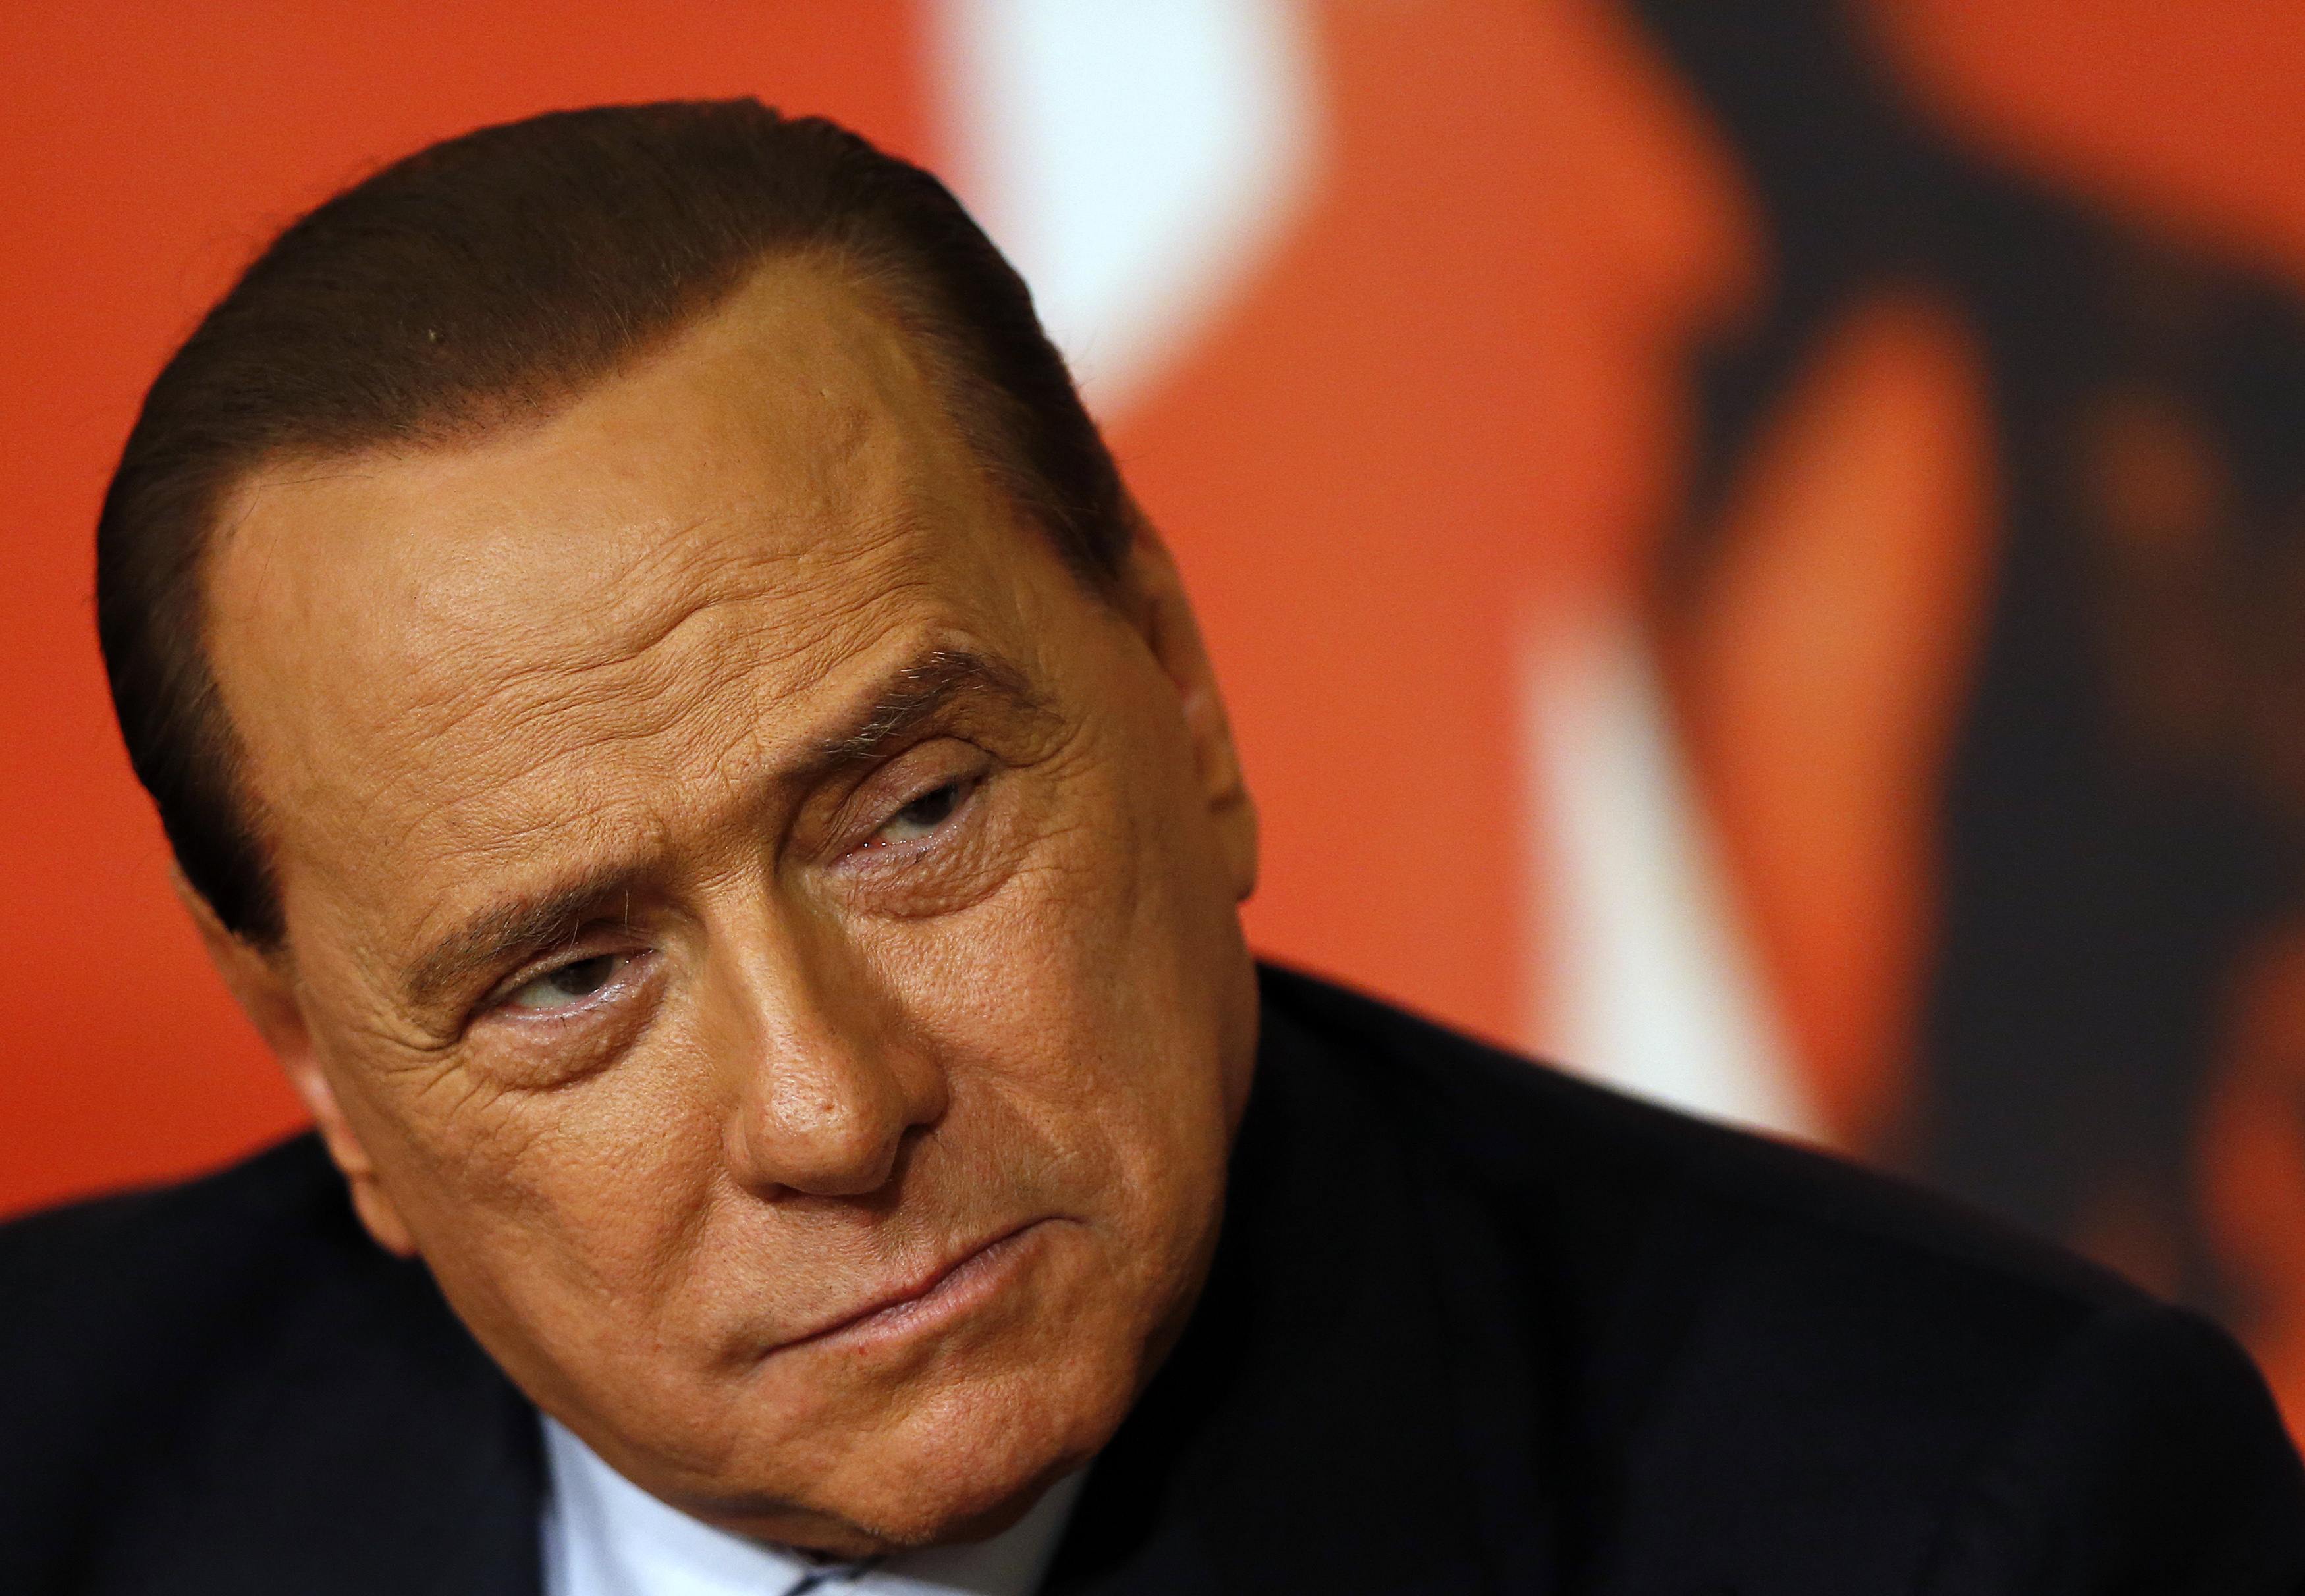 Italy's former prime minister Silvio Berlusconi in Rome on Monday. Photo: Reuters